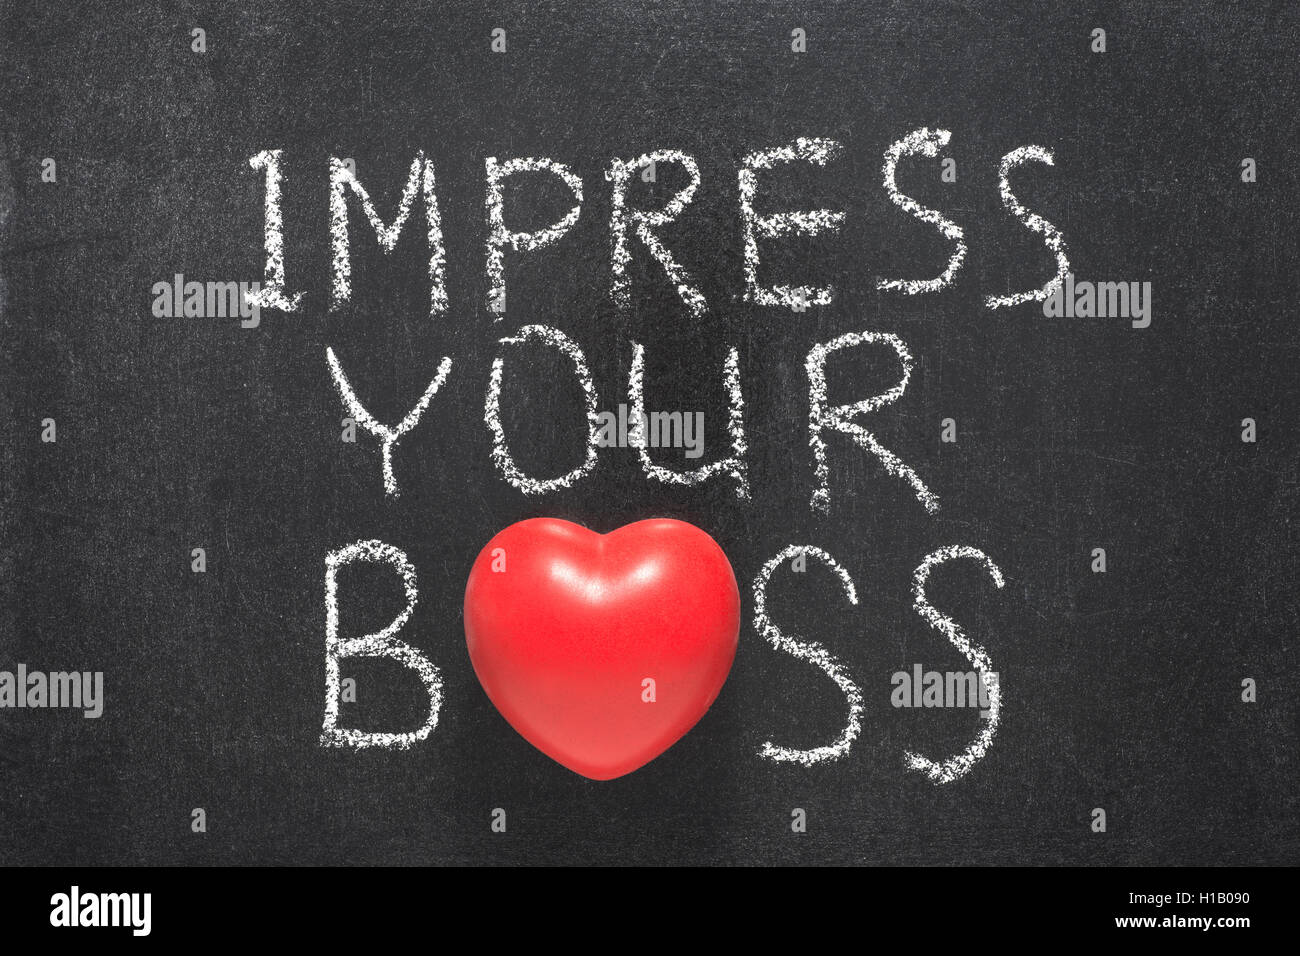 impress your boss phrase handwritten on blackboard with heart symbol instead of O Stock Photo